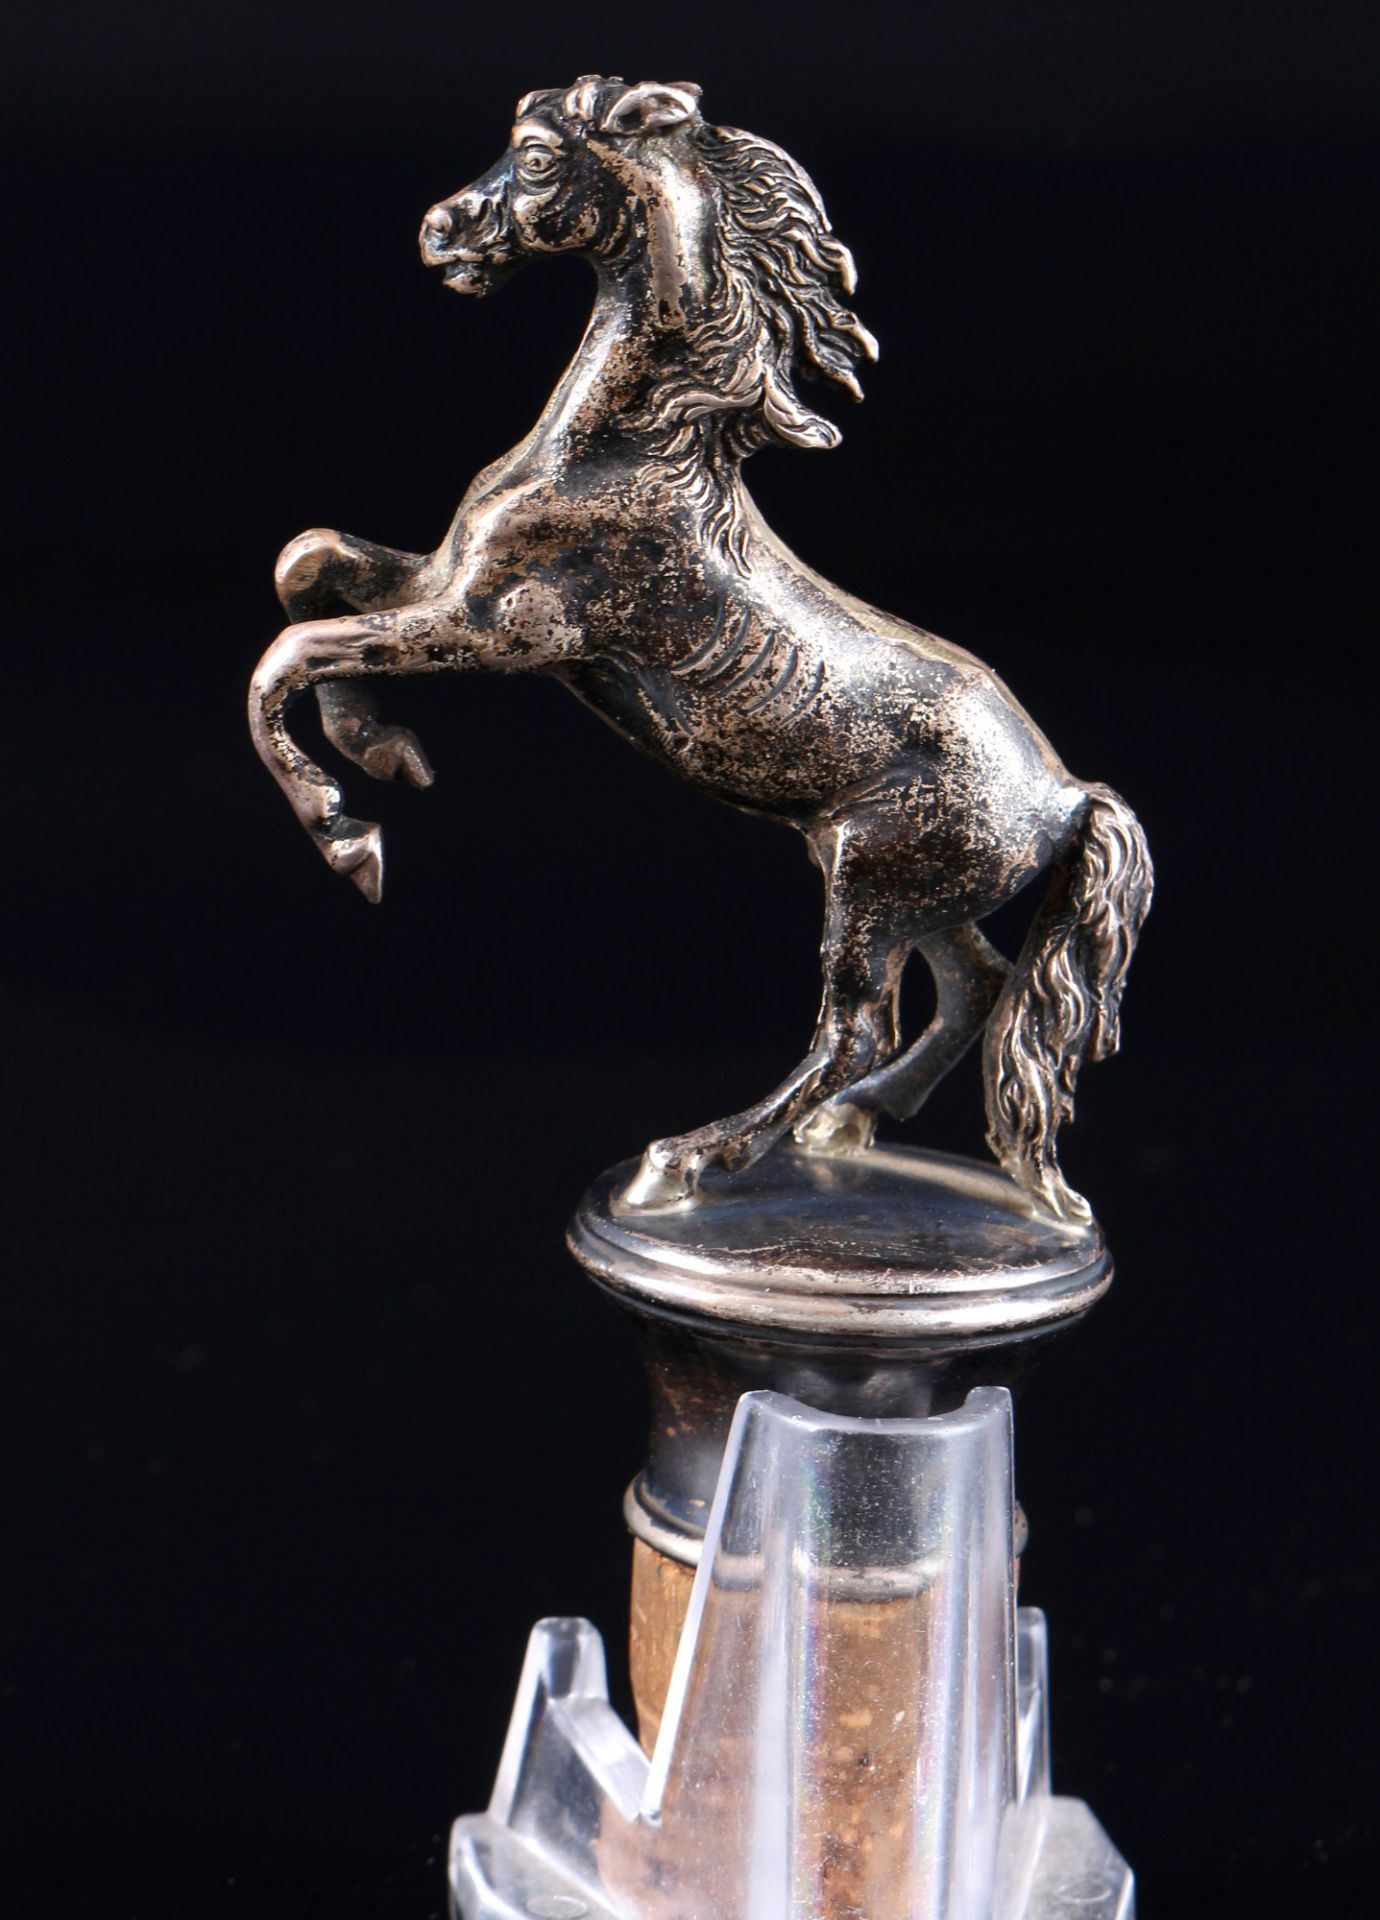 925 silver bottle cork as a horse, 925 Silber Pferd - Flaschenkorken, - Image 3 of 5